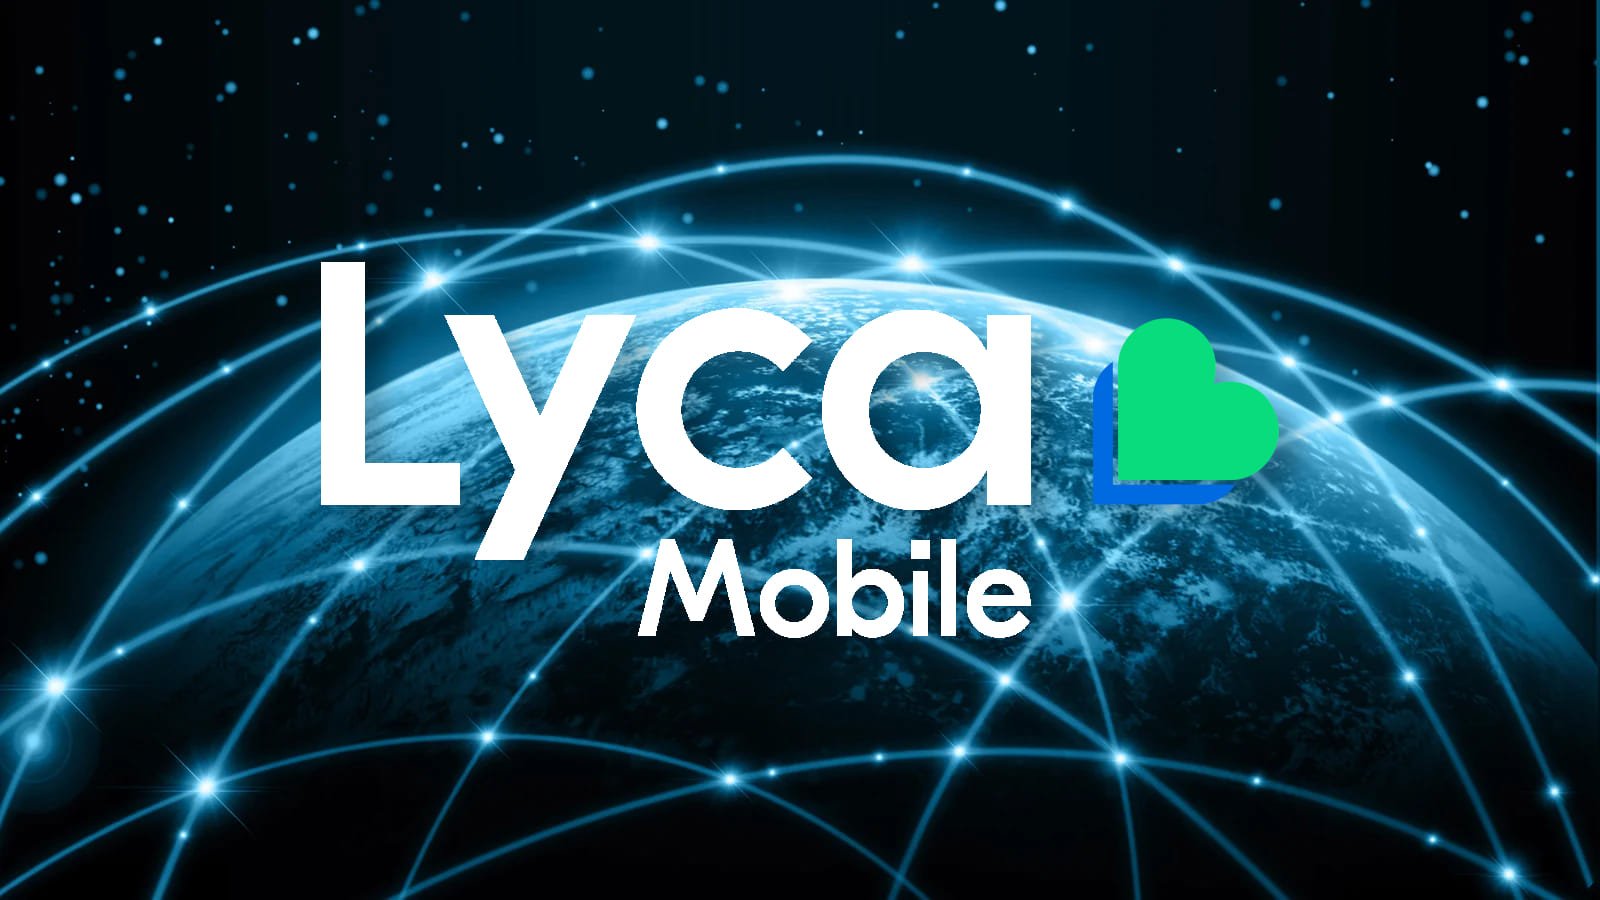 Lyca Mobile investigates customer data leak after cyberattack – Source: www.bleepingcomputer.com